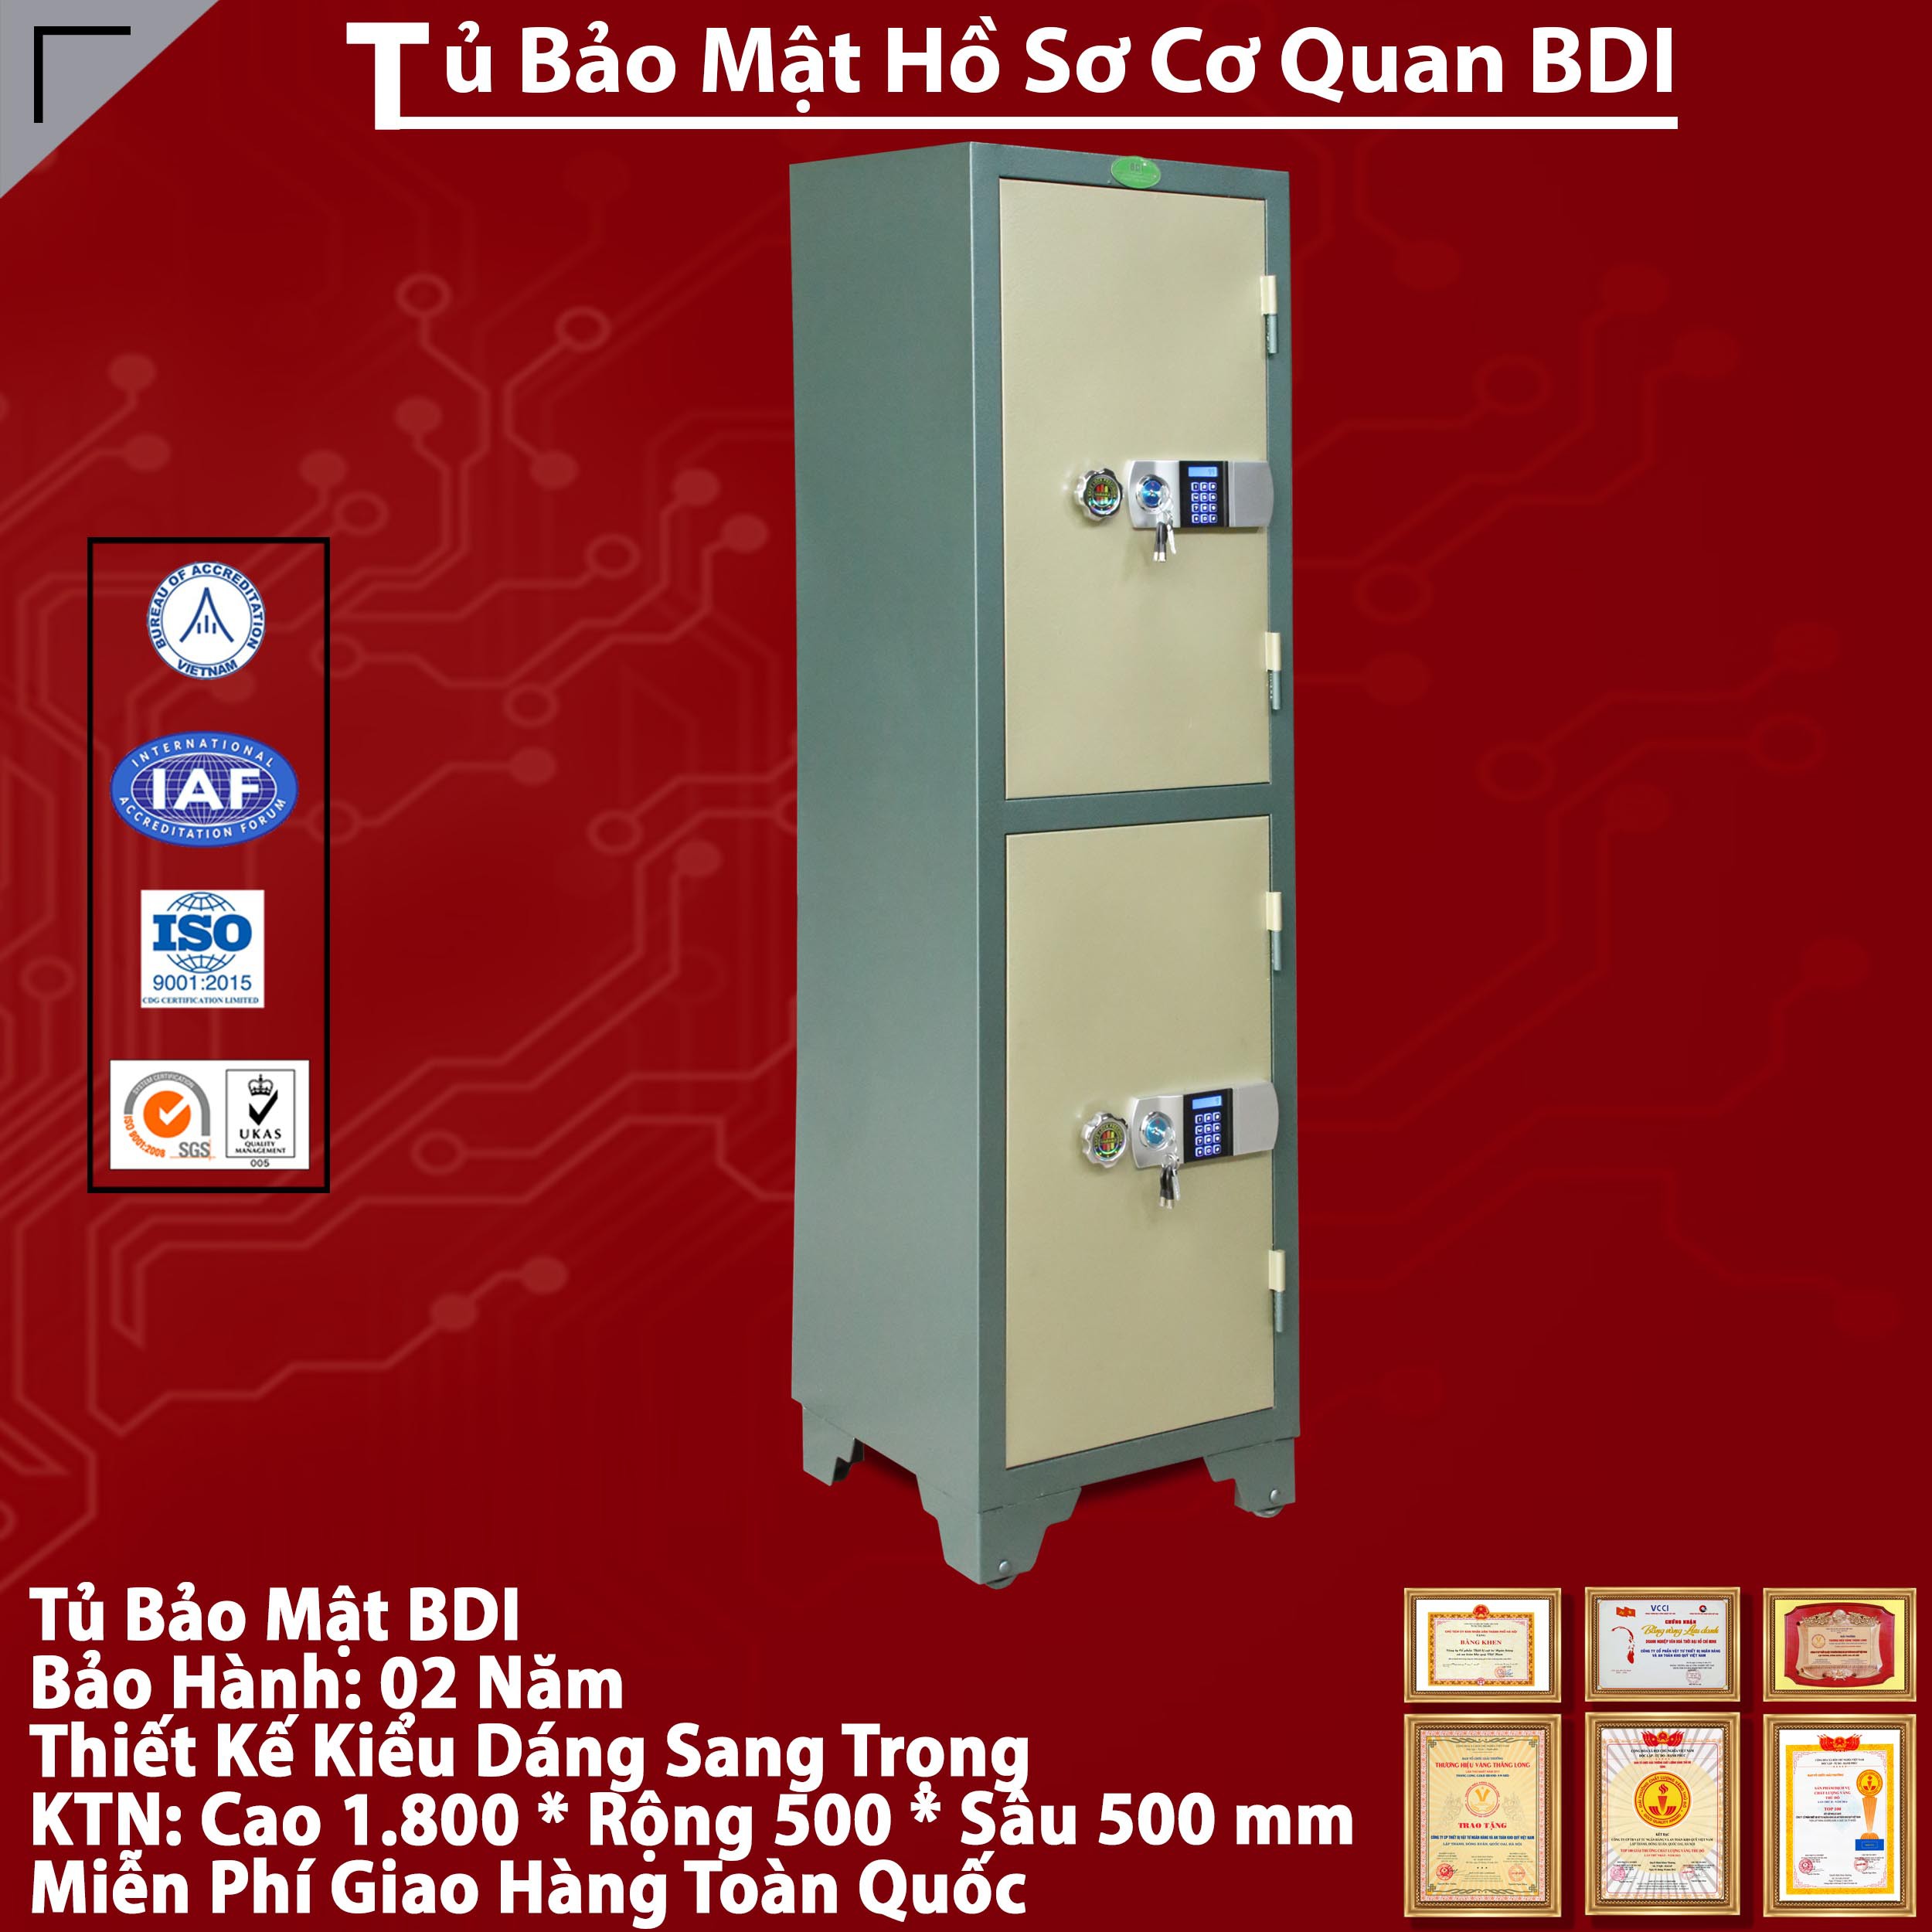 Tu Bao Mat 2 Canh Hien Dai Cao Cap